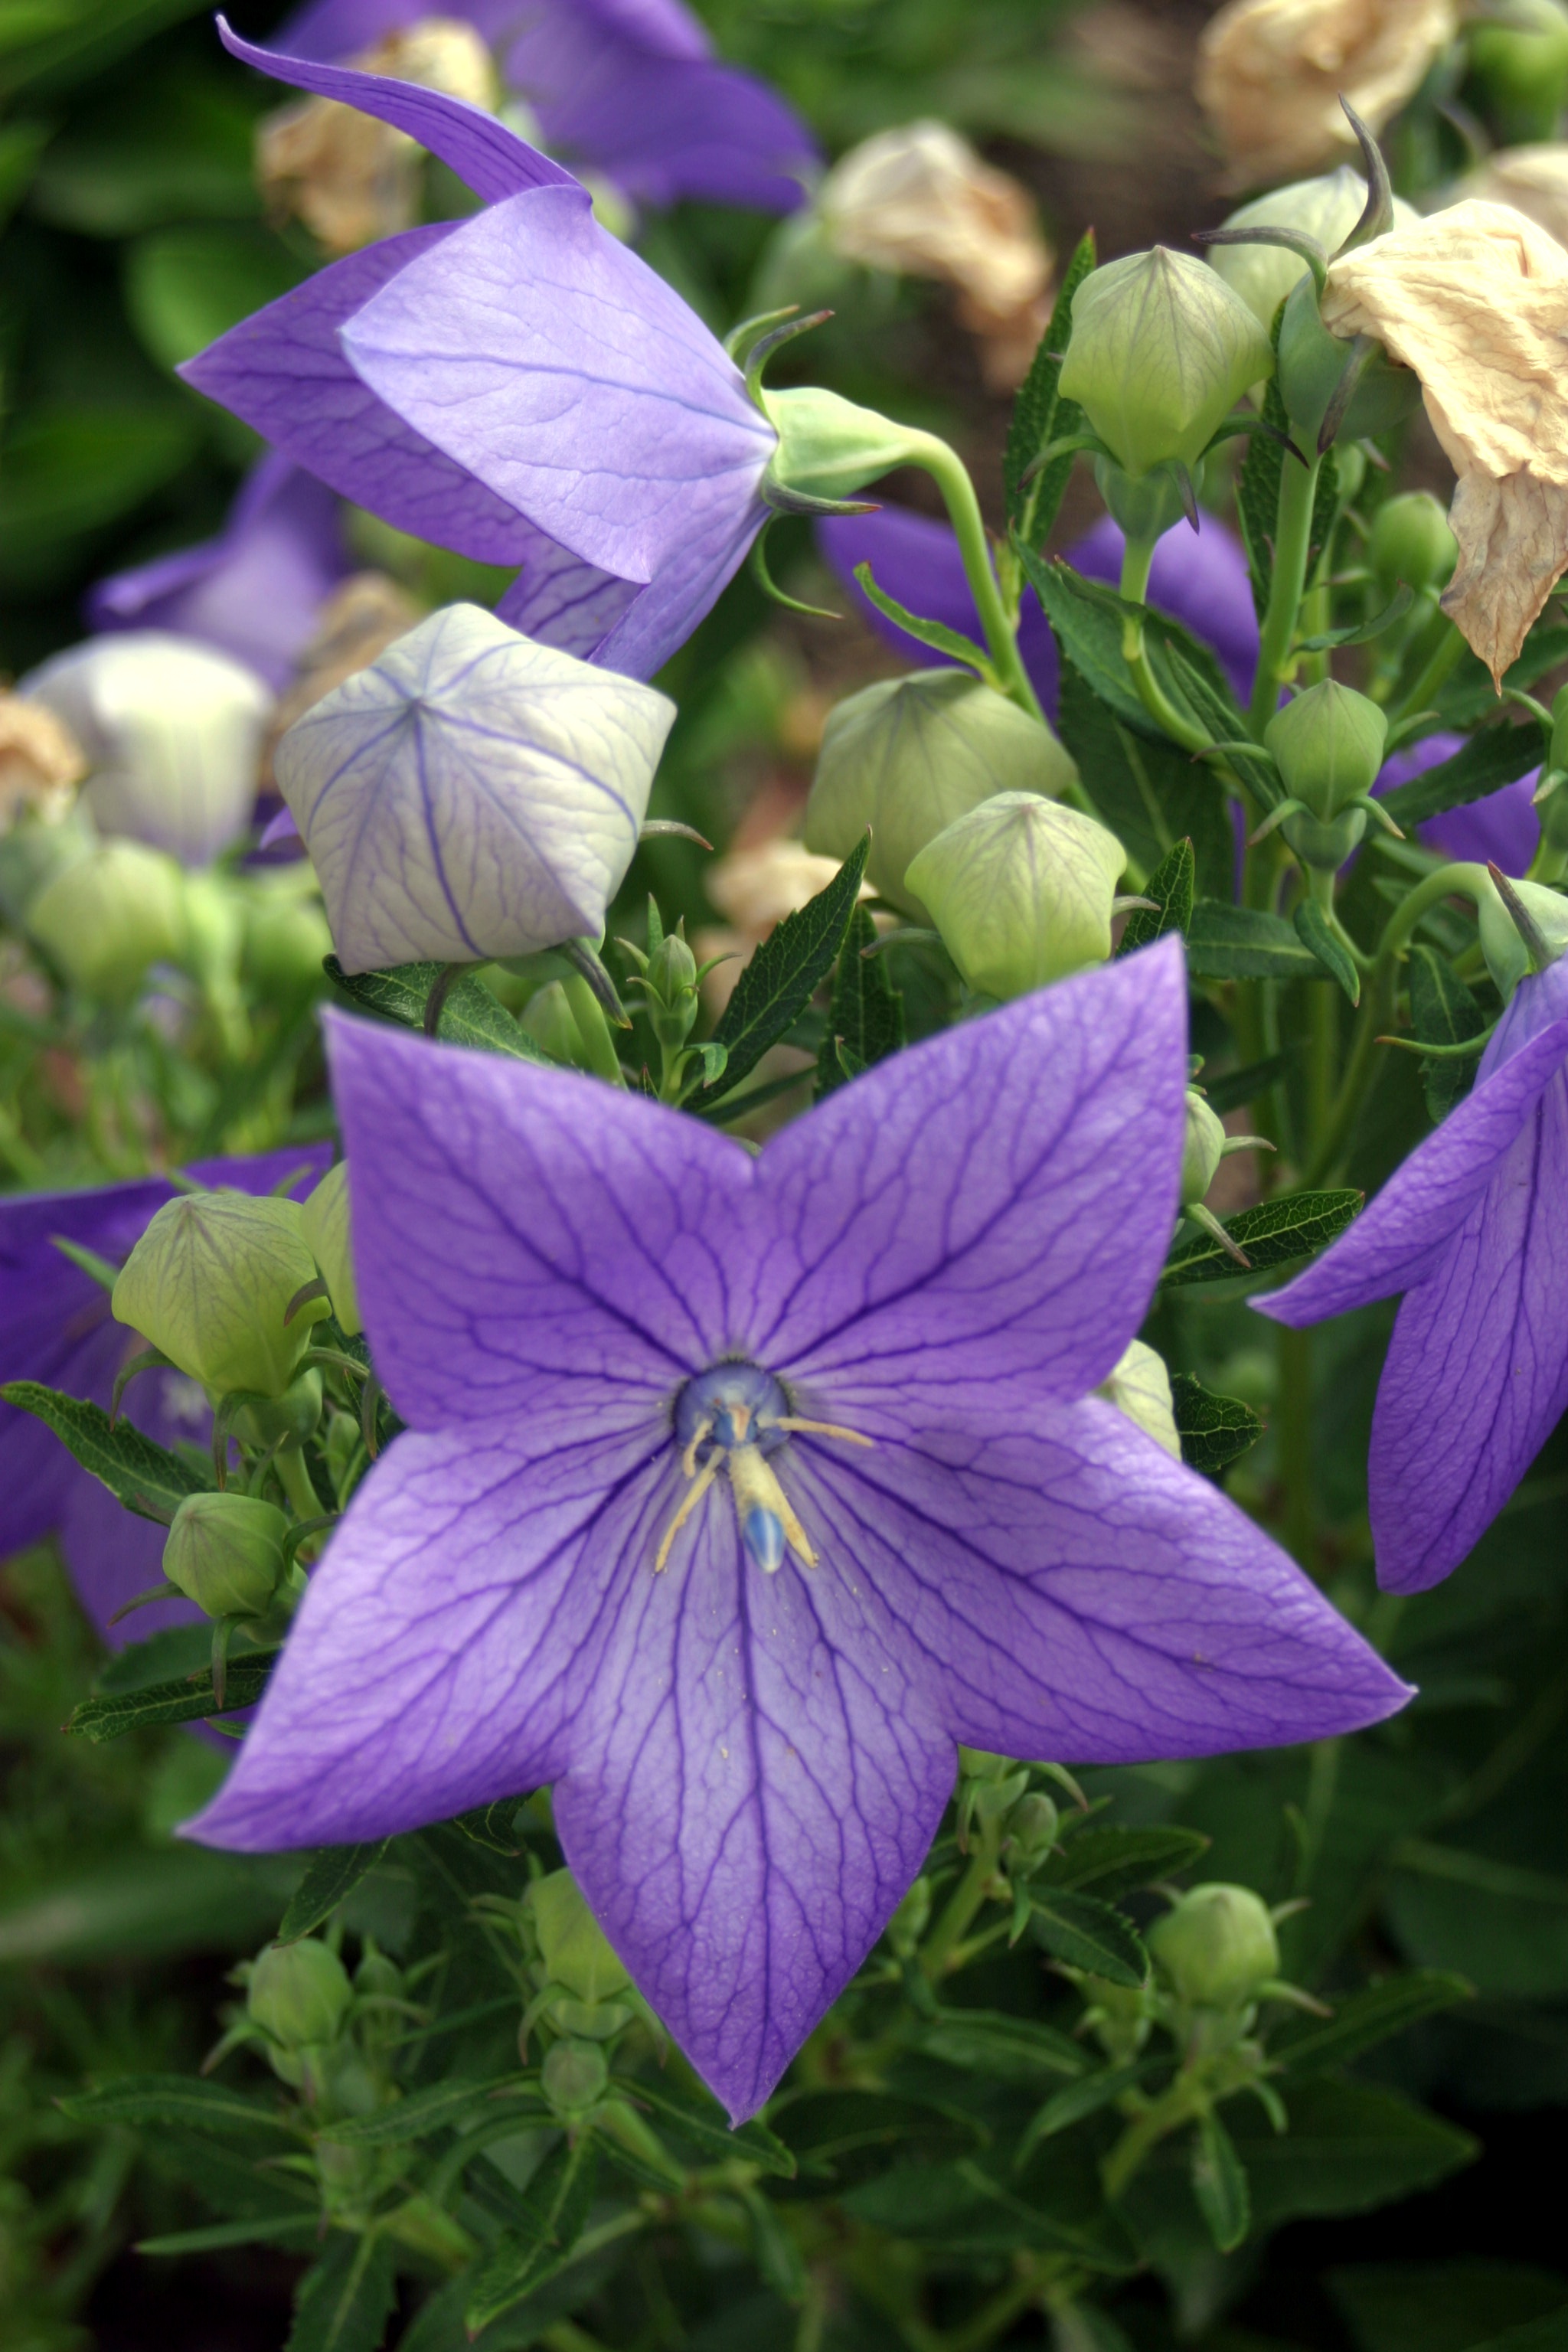 A large, purple, star-shaped flower.